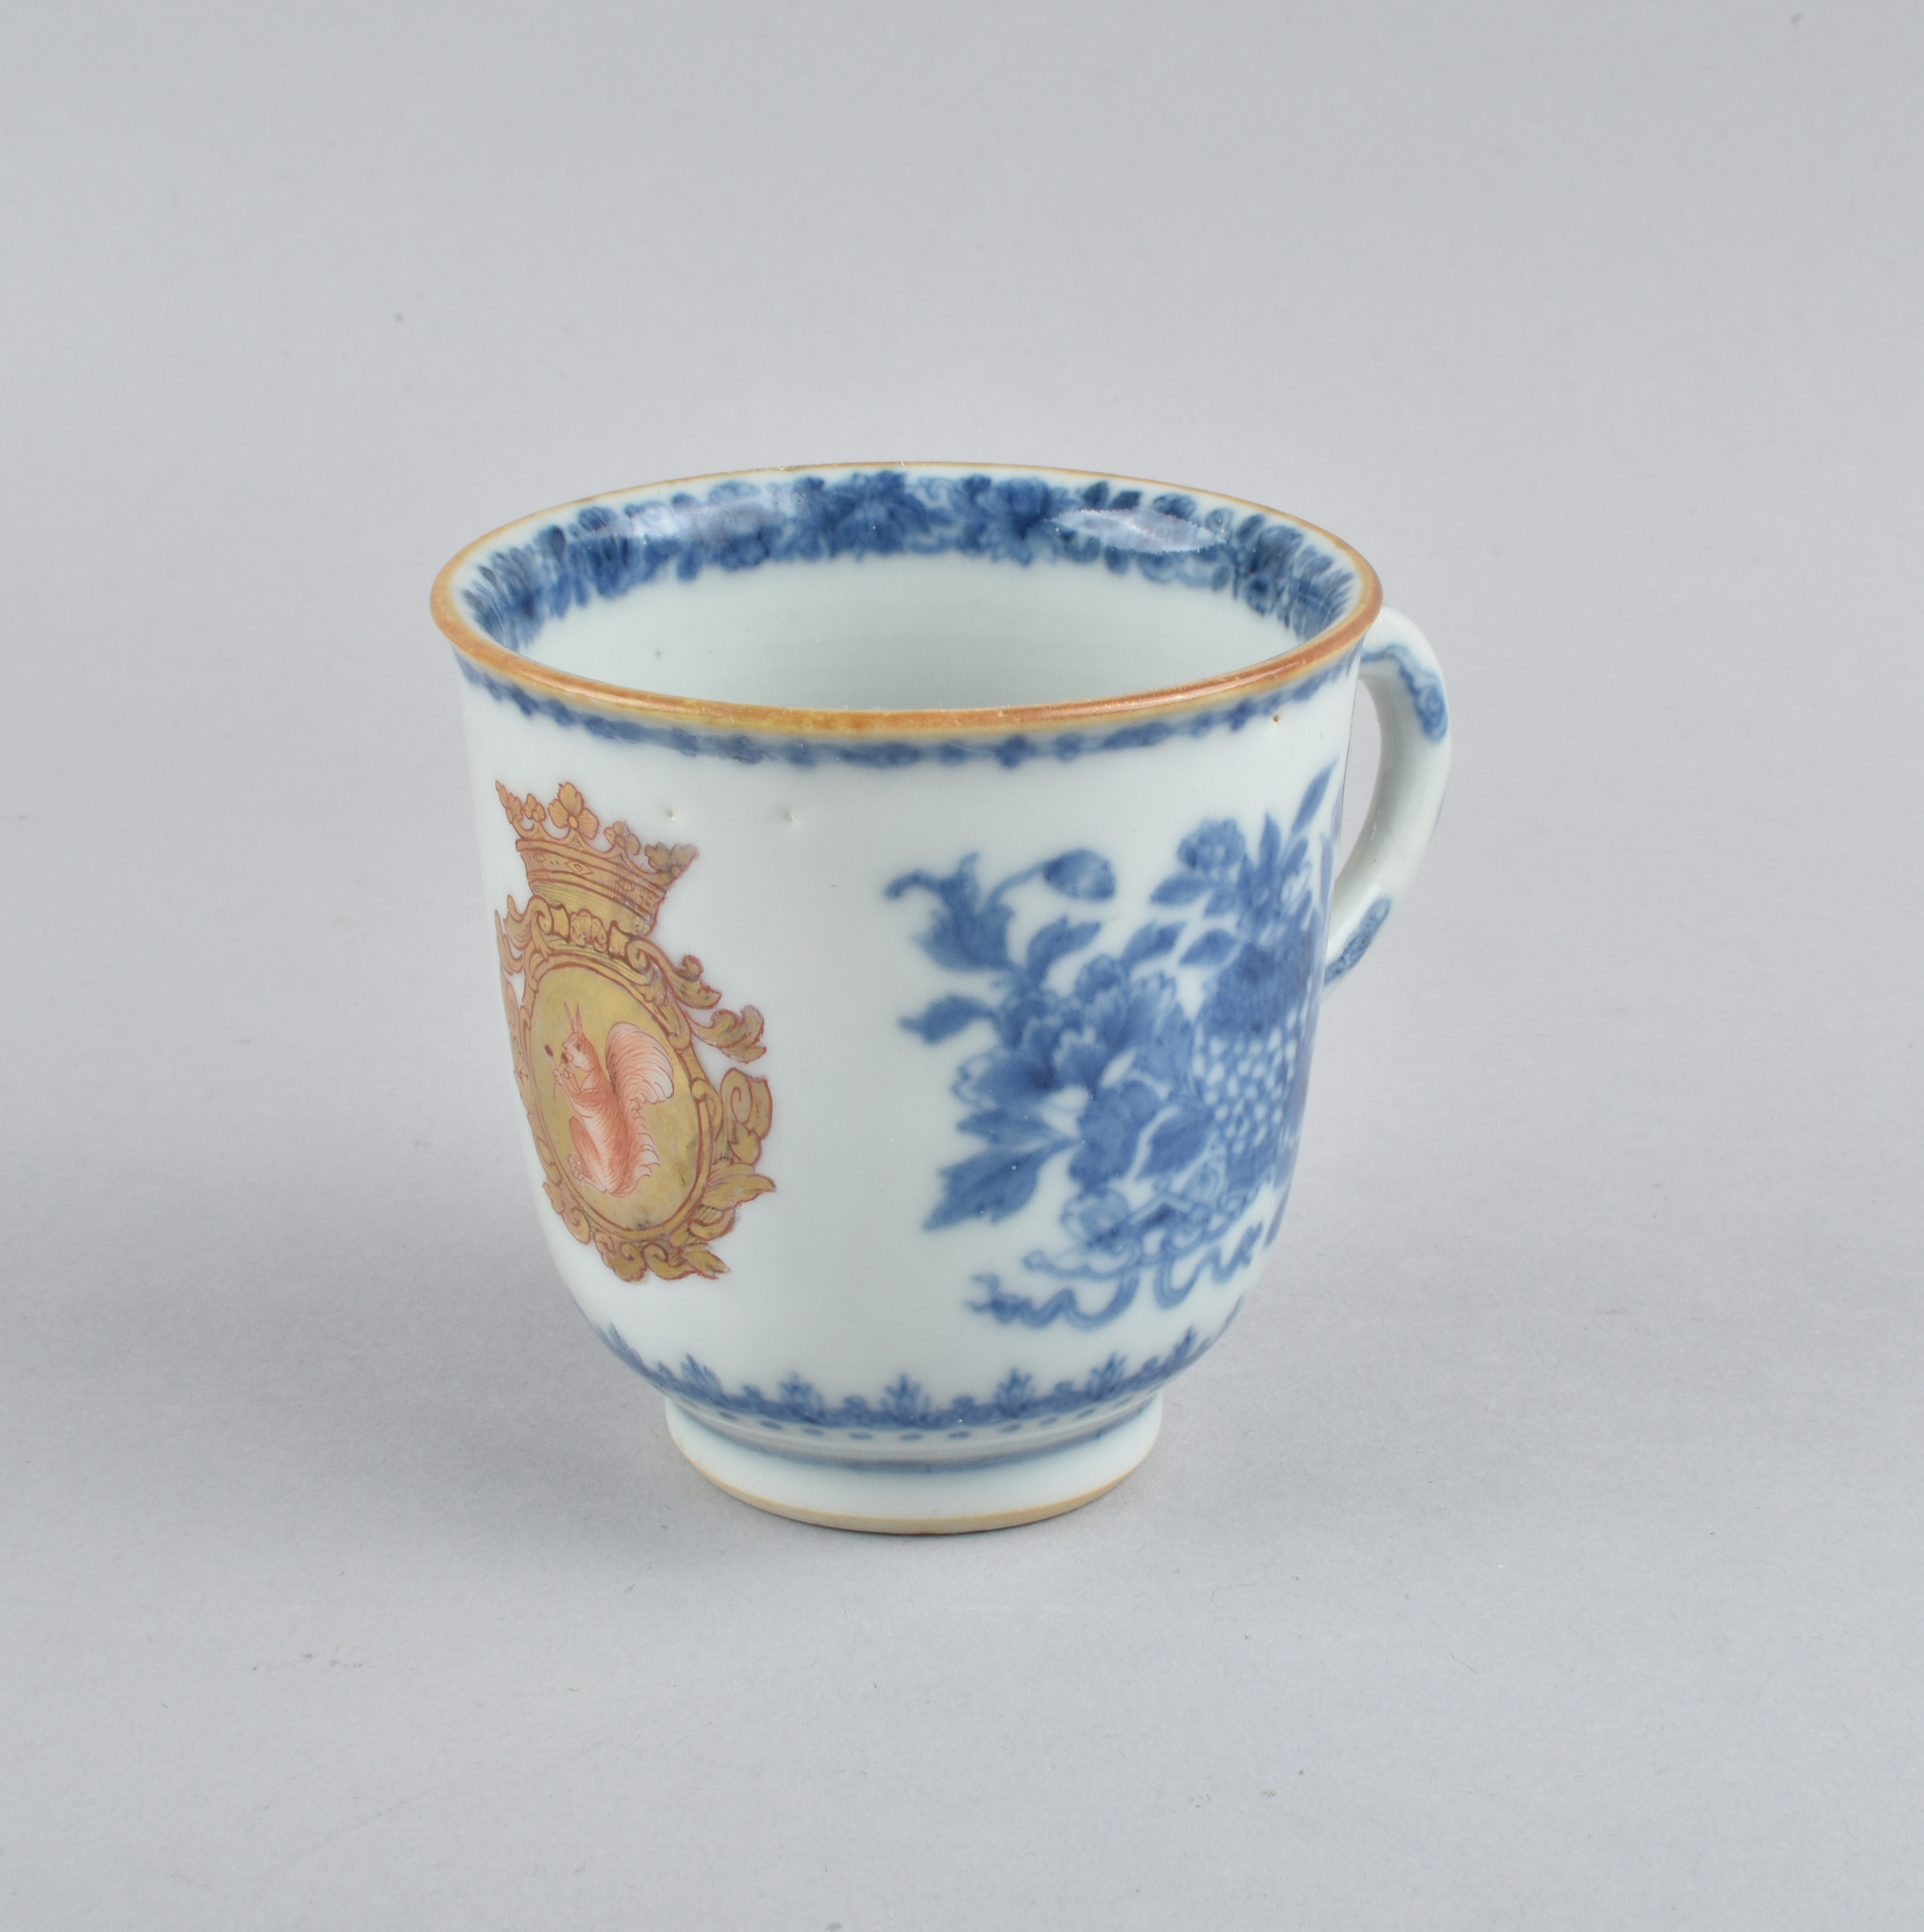 Porcelaine Qianlong (1736-1795), China